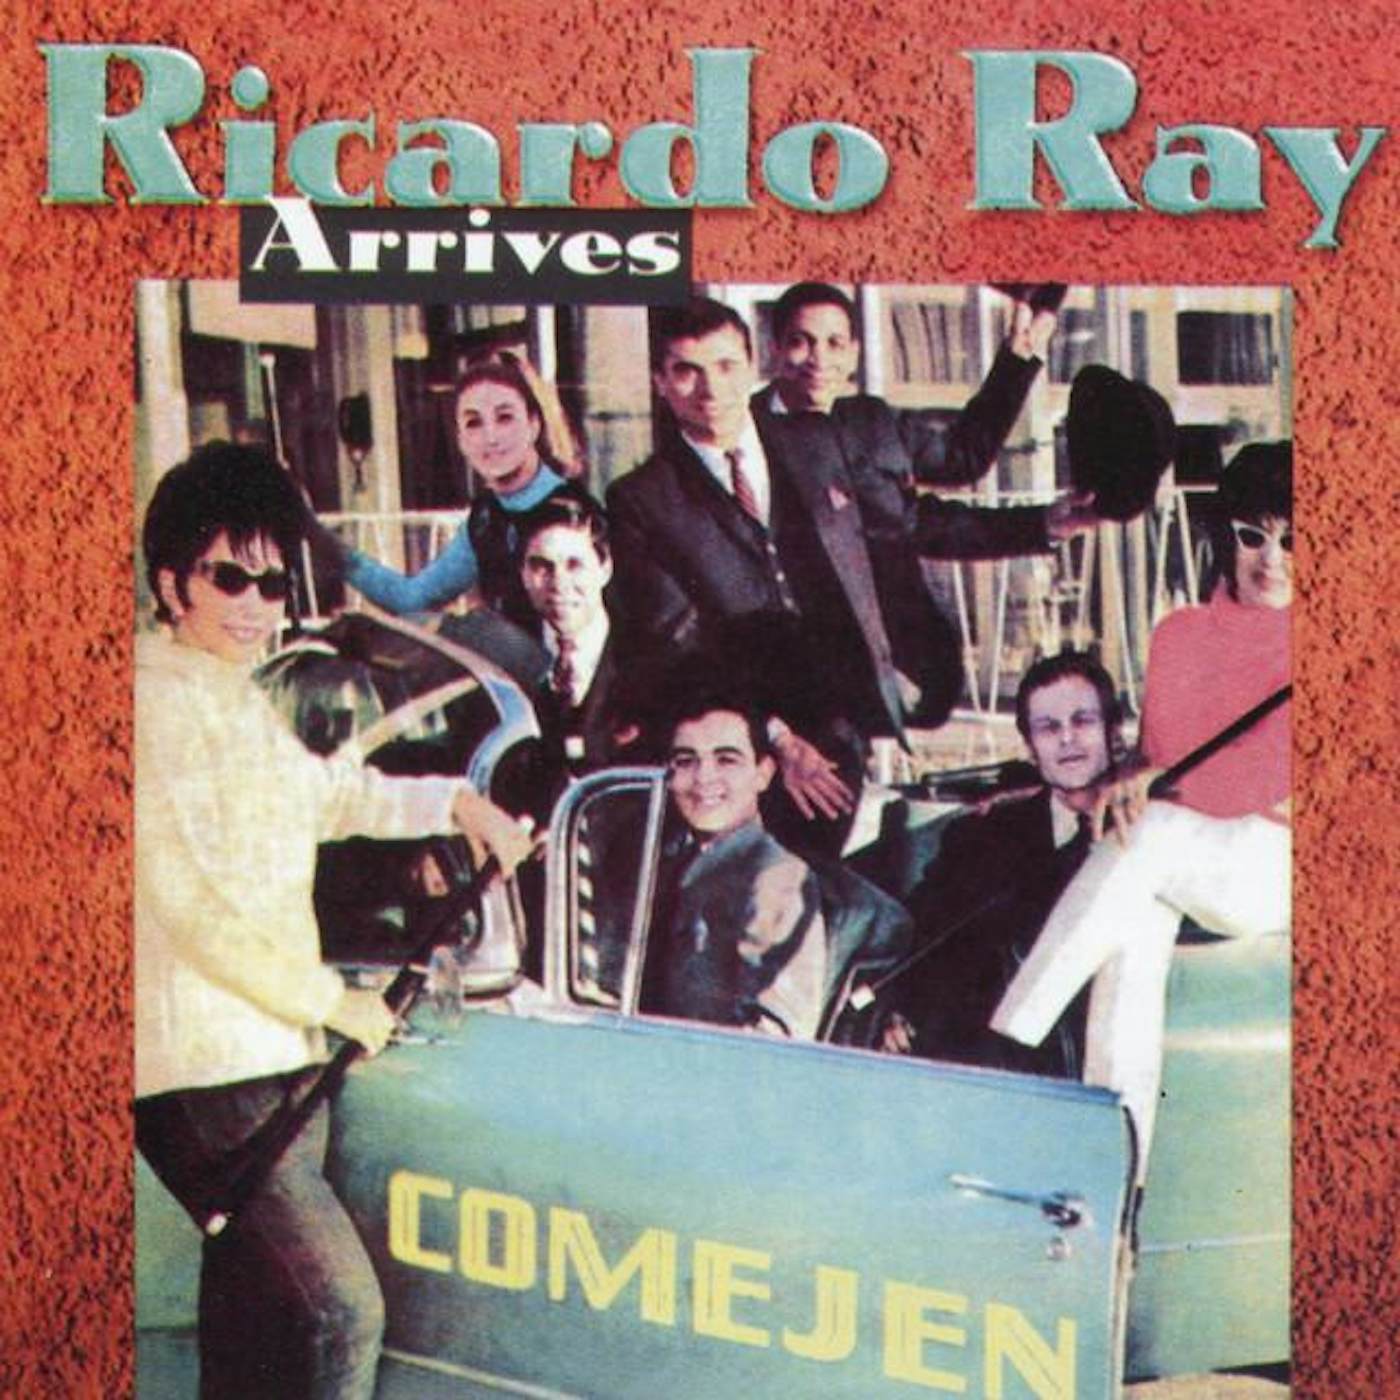 Ricardo Ray